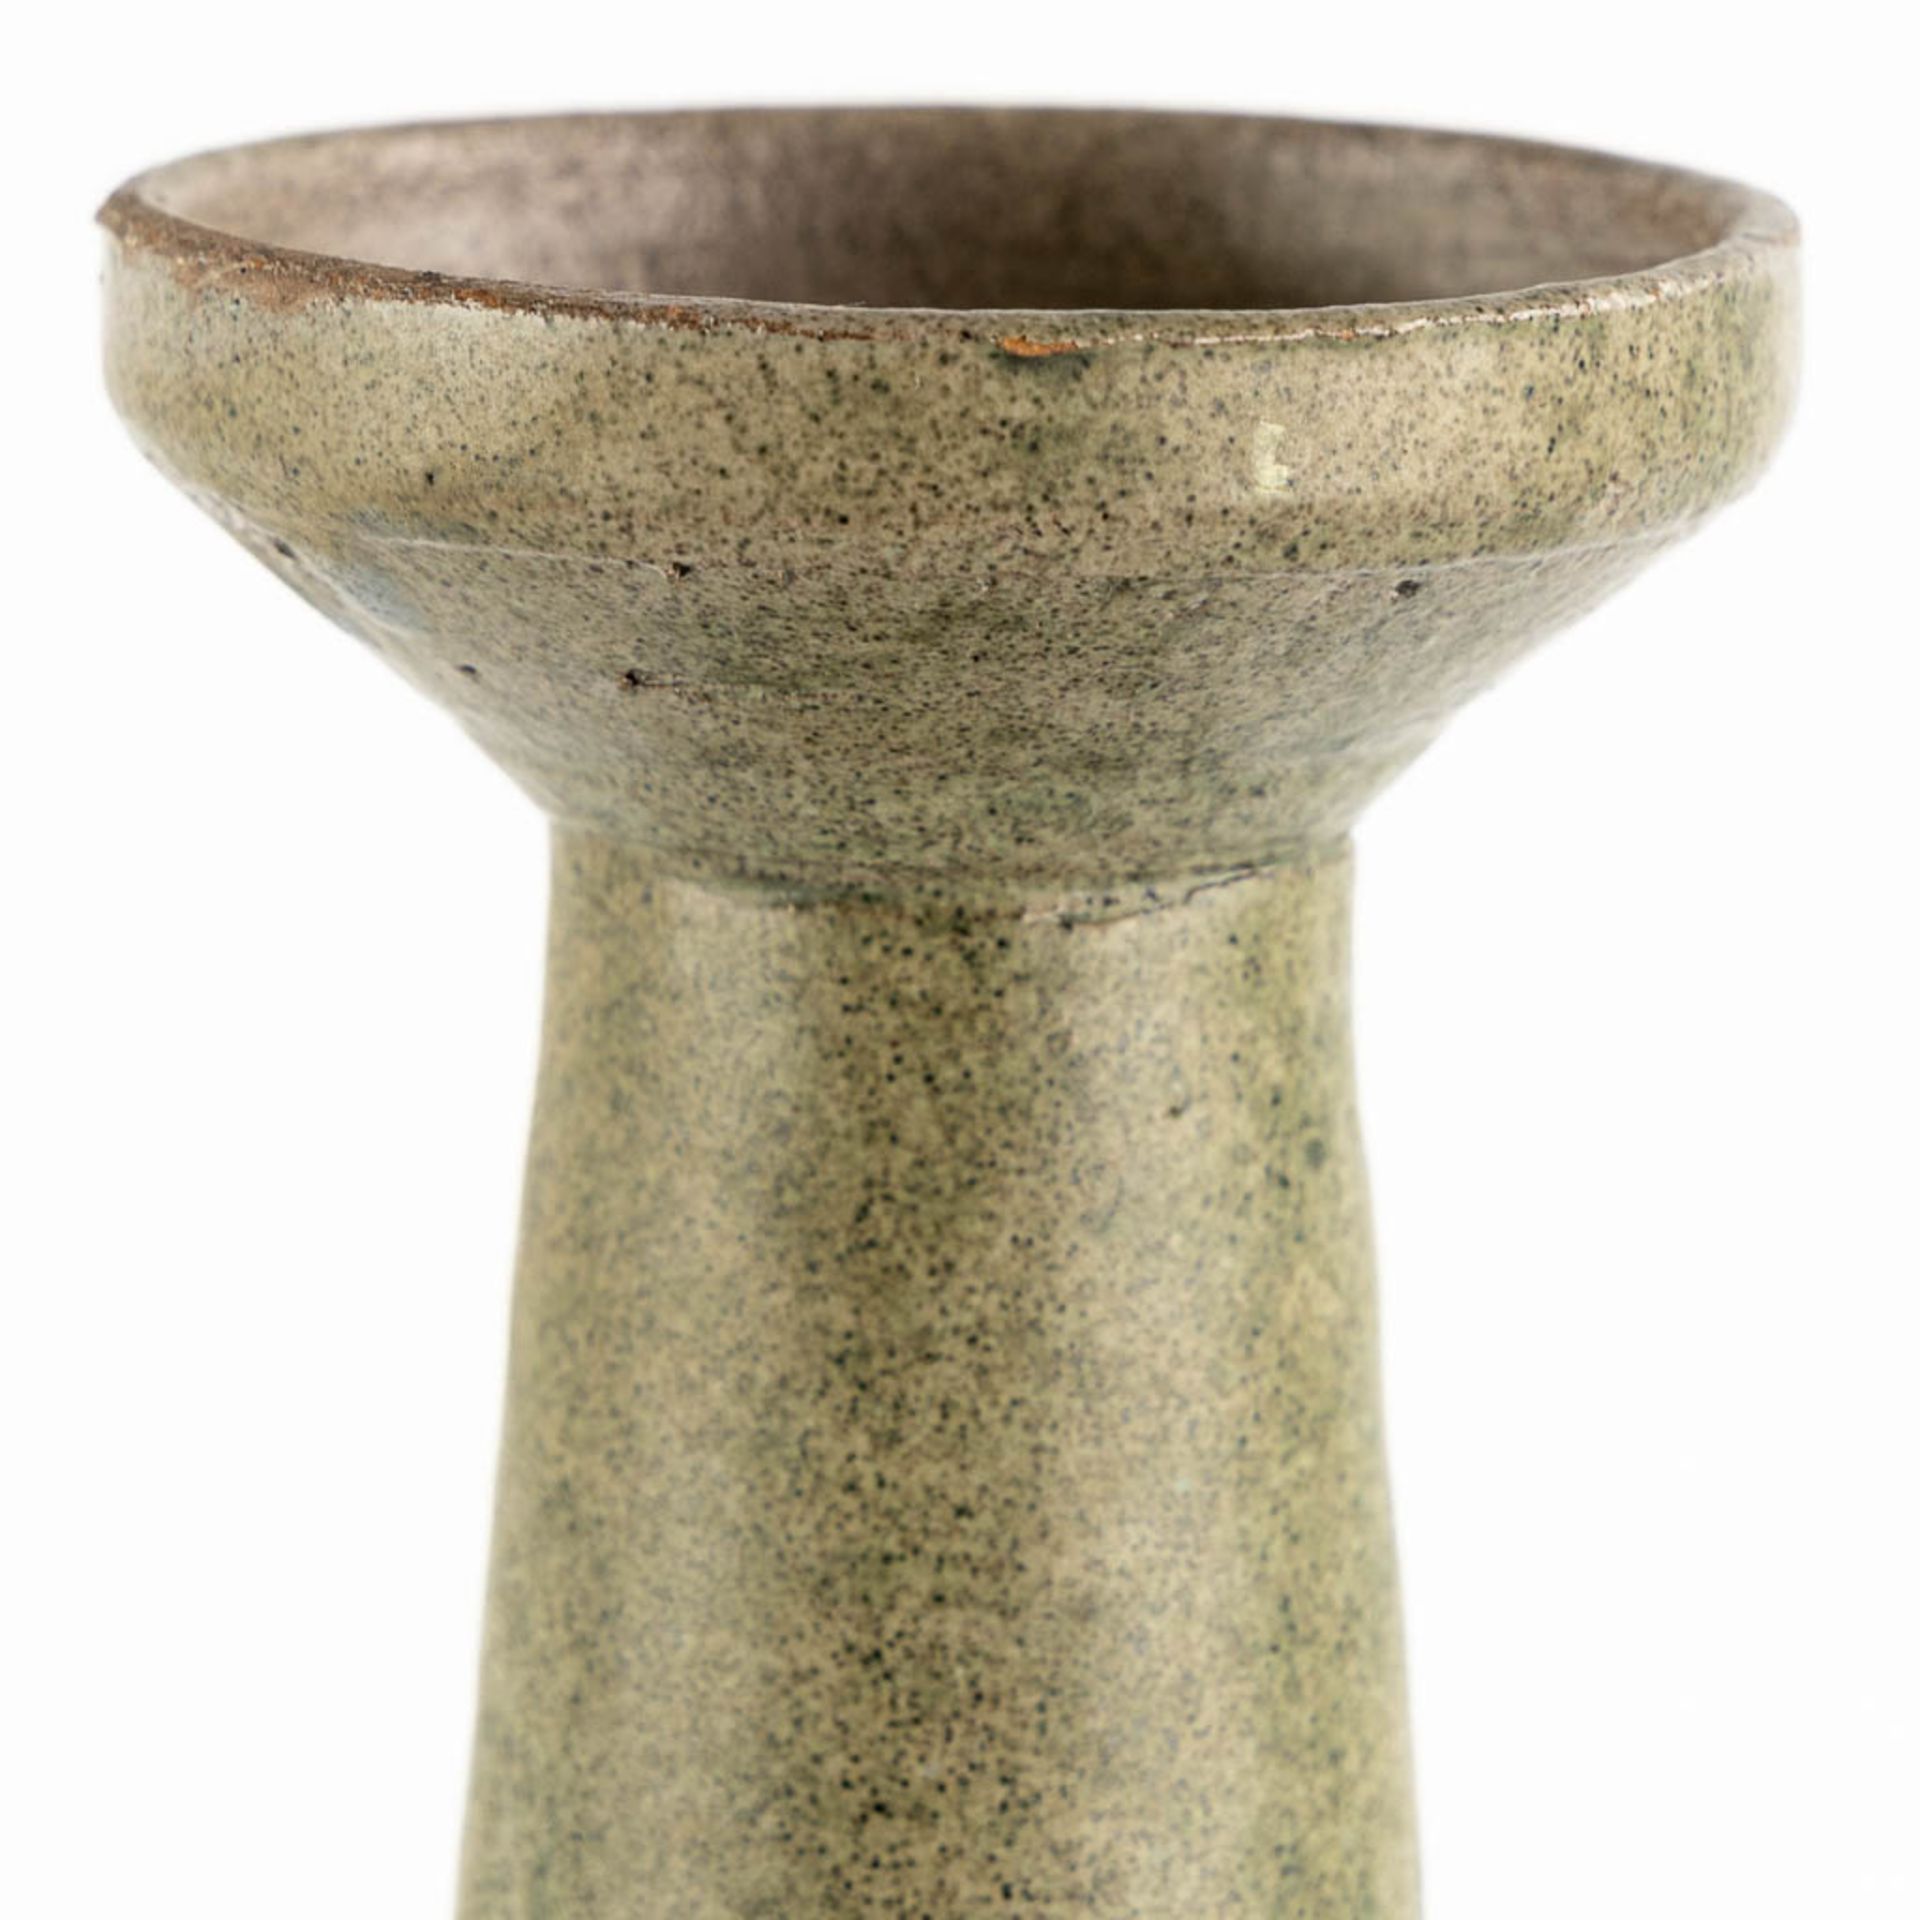 Amphora or Keramar, a large green vase, glazed ceramics. (H:53 x D:14 cm) - Bild 6 aus 10